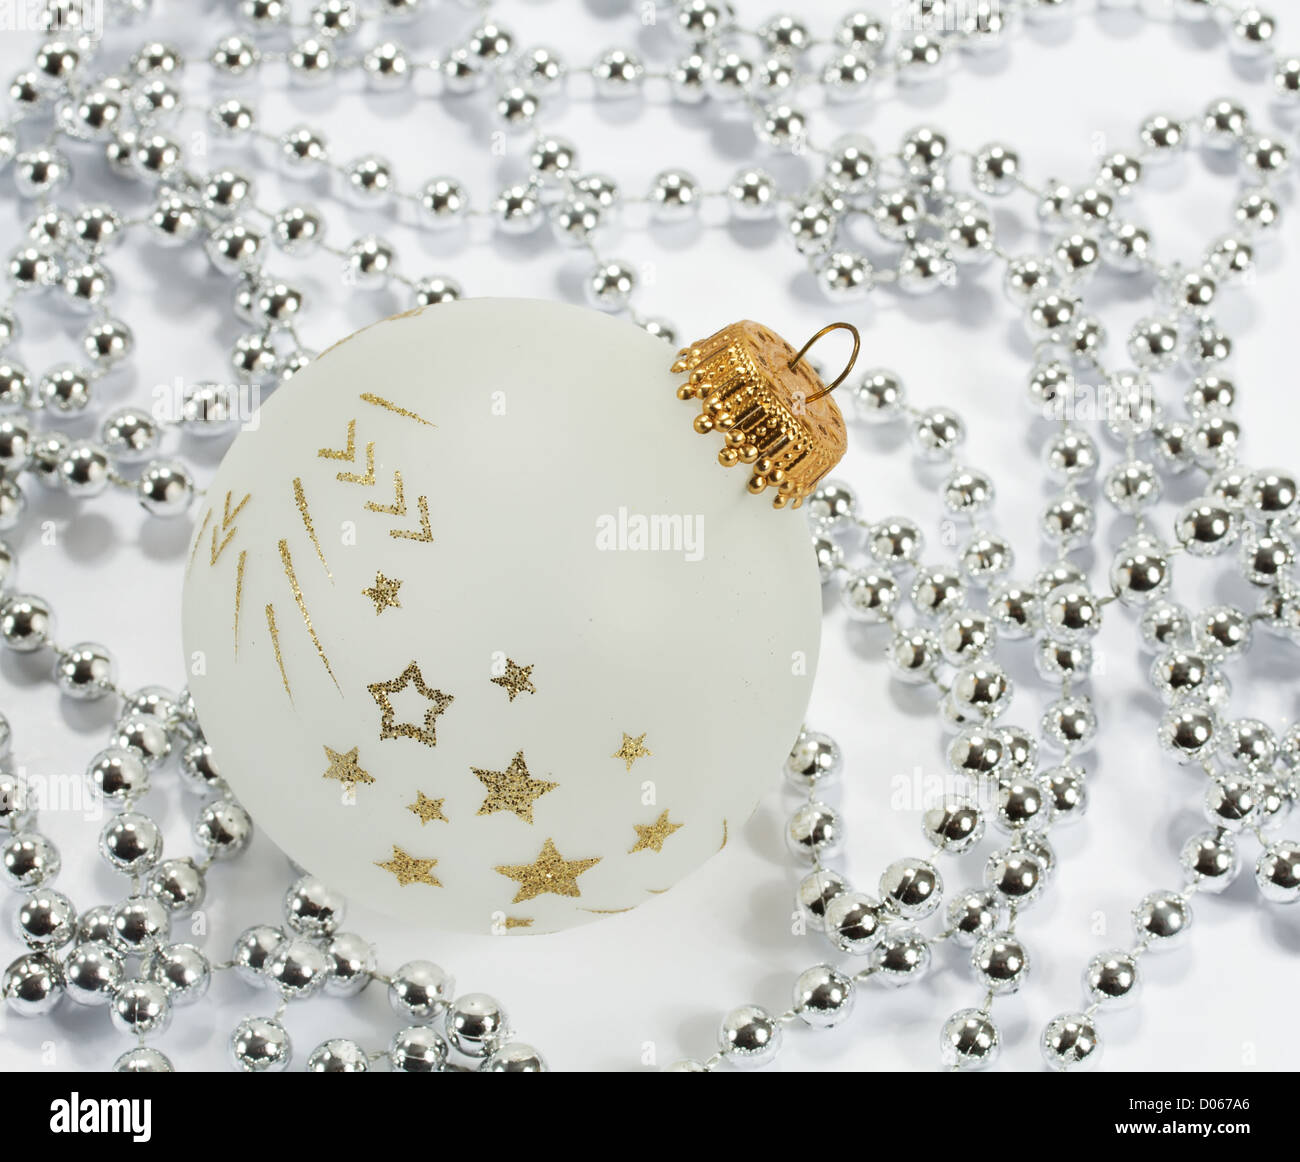 Christmas background with shiny balls Stock Photo - Alamy